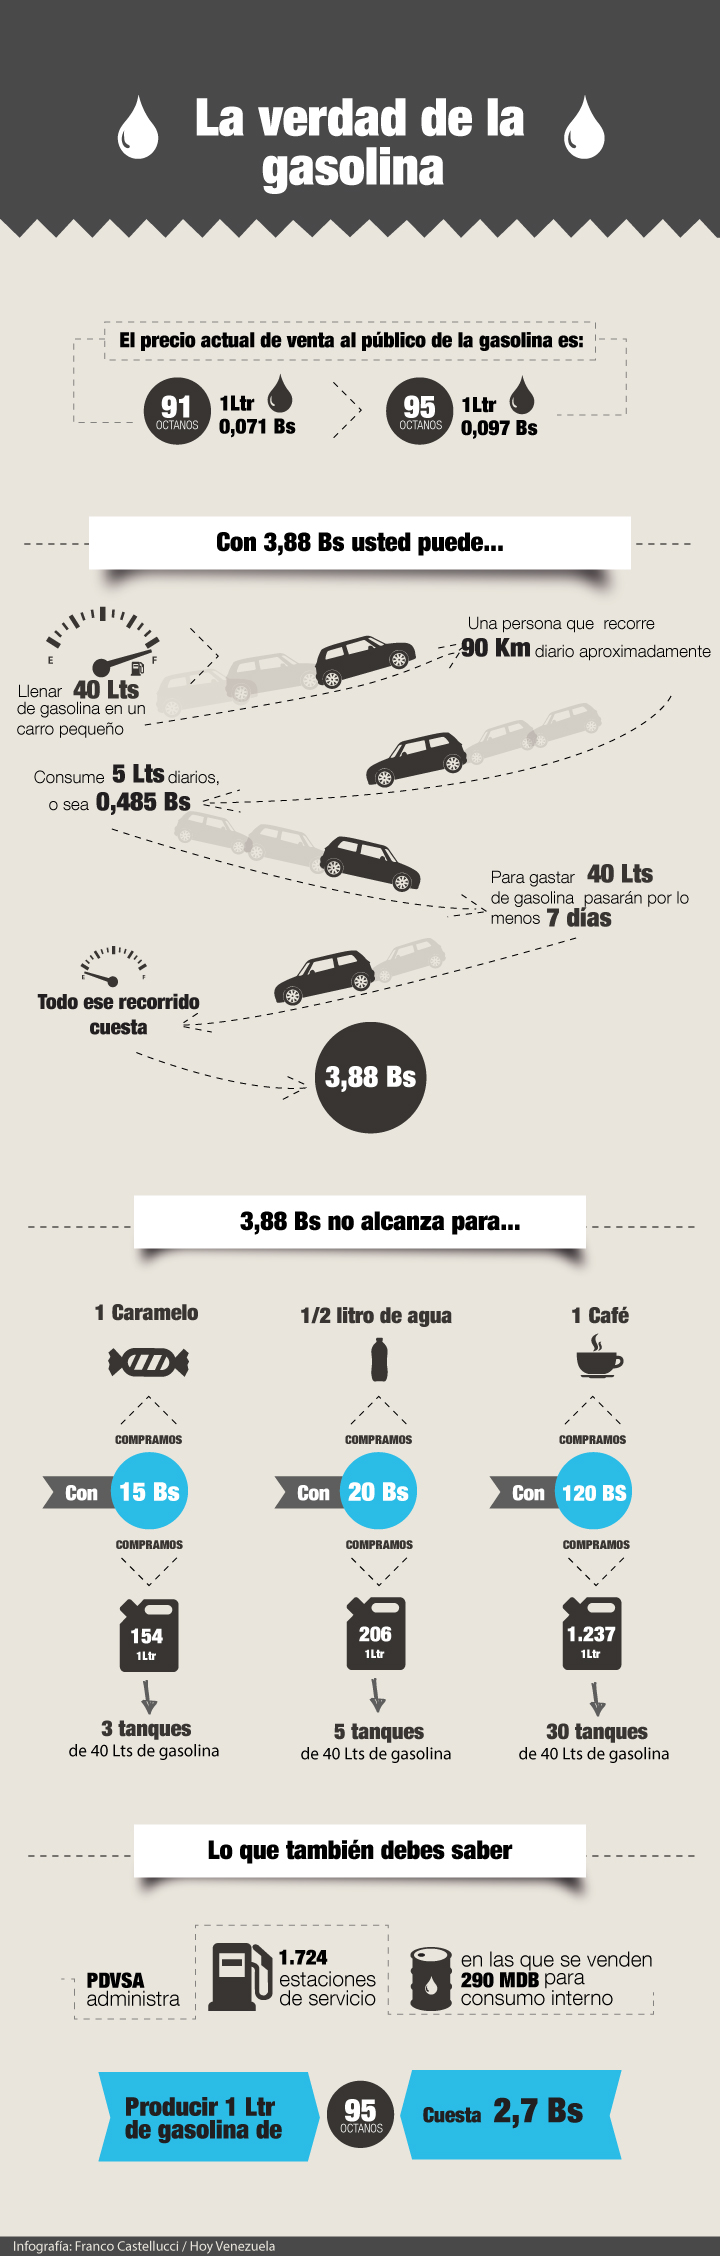 infografia gasolina venezuela deseño